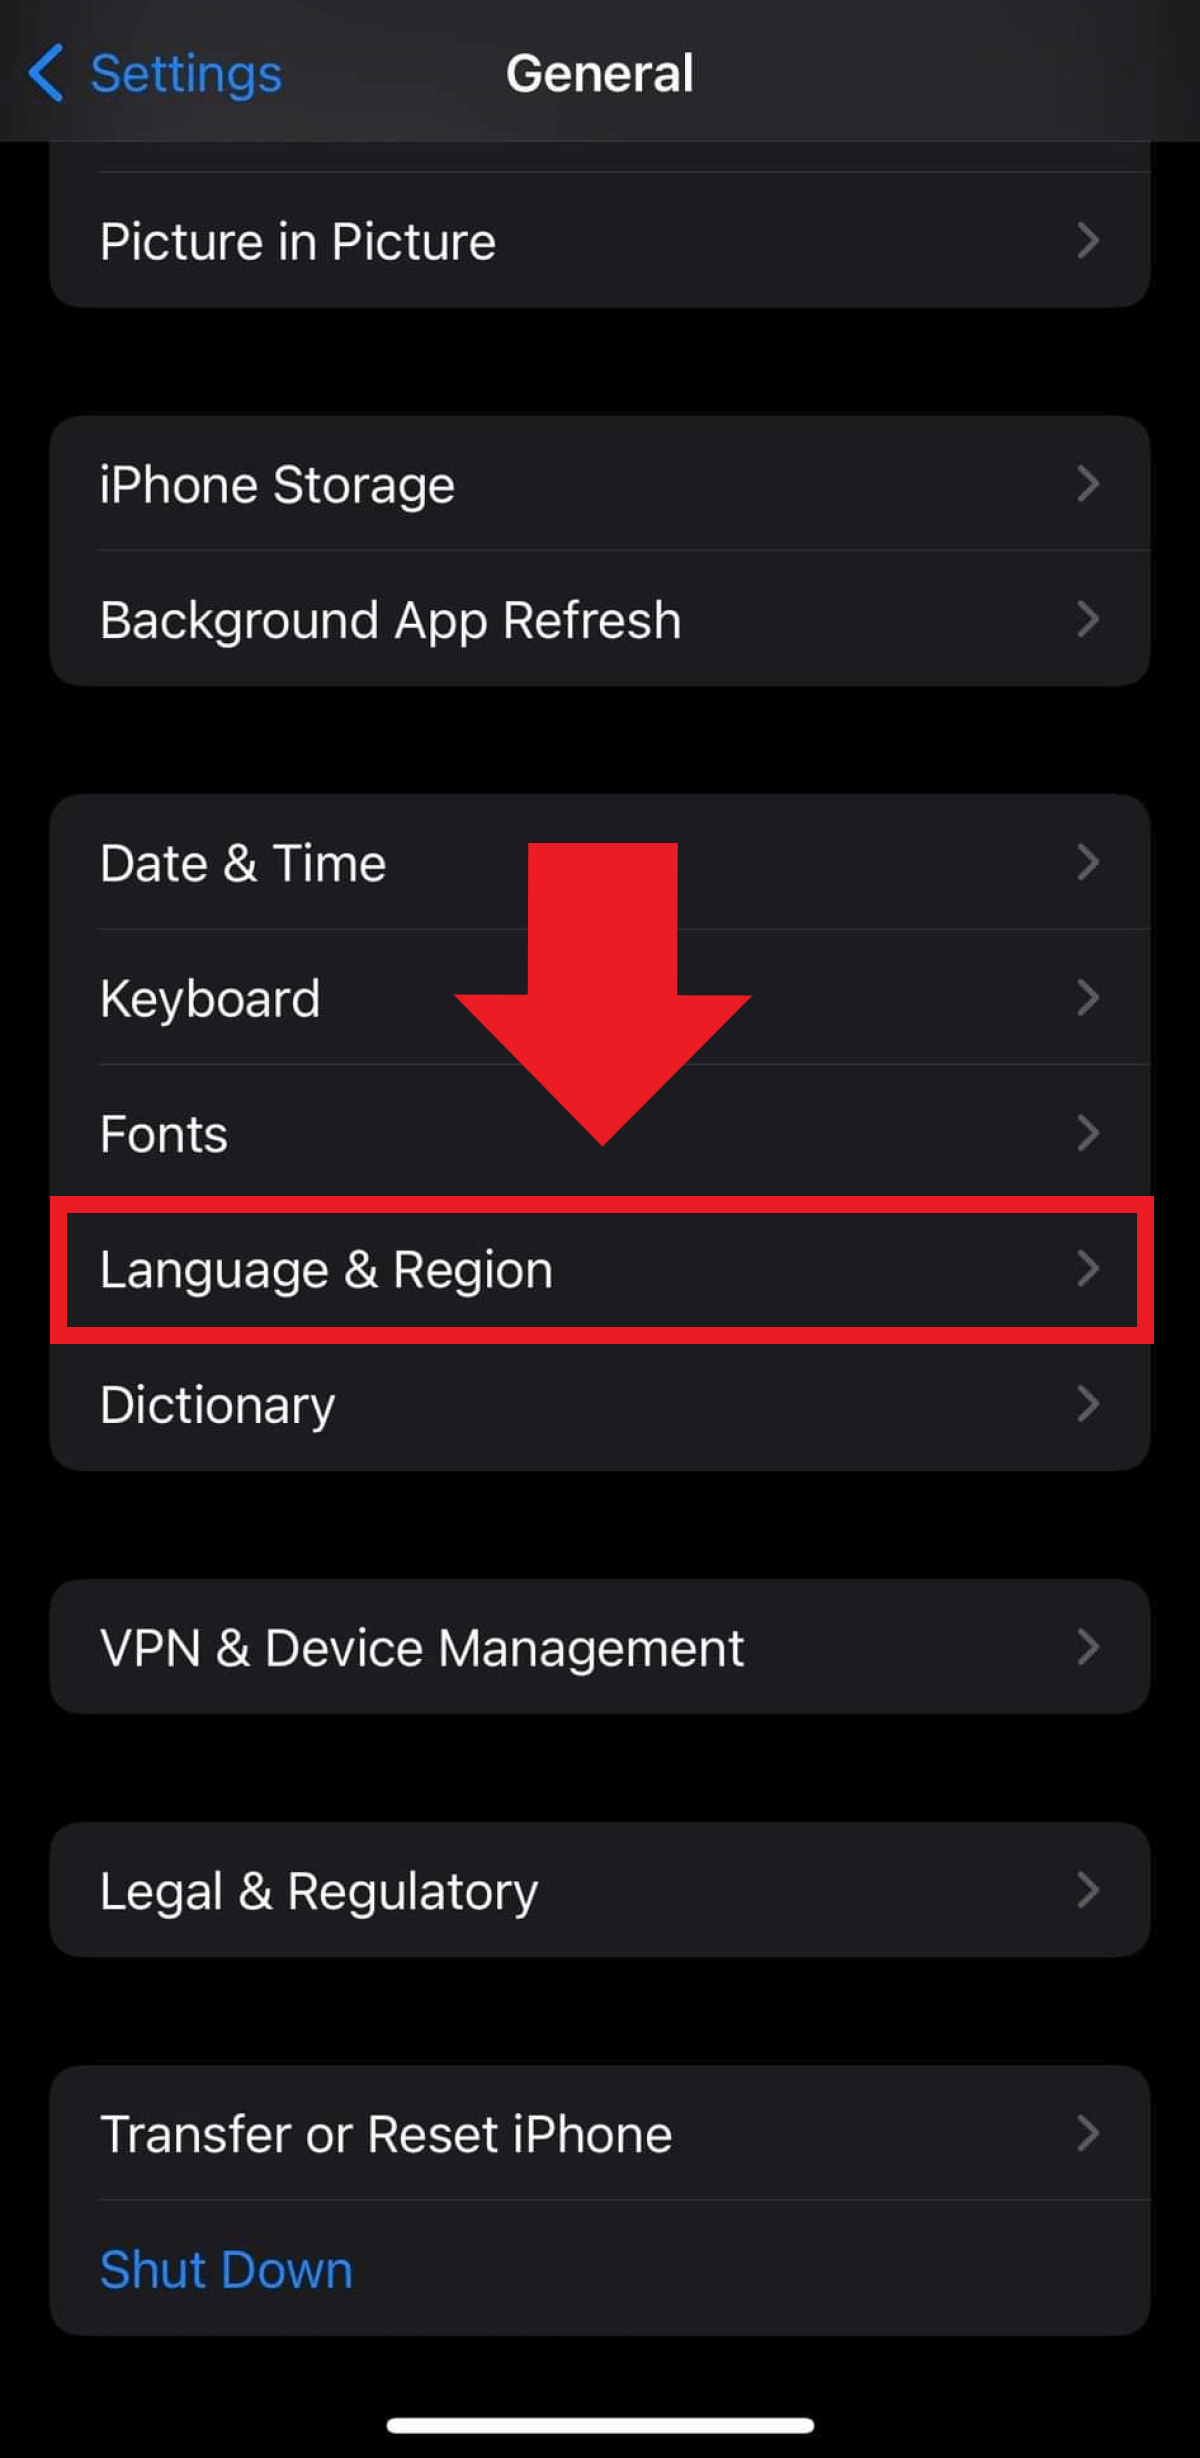 The “Language & Region” item in the iOS settings